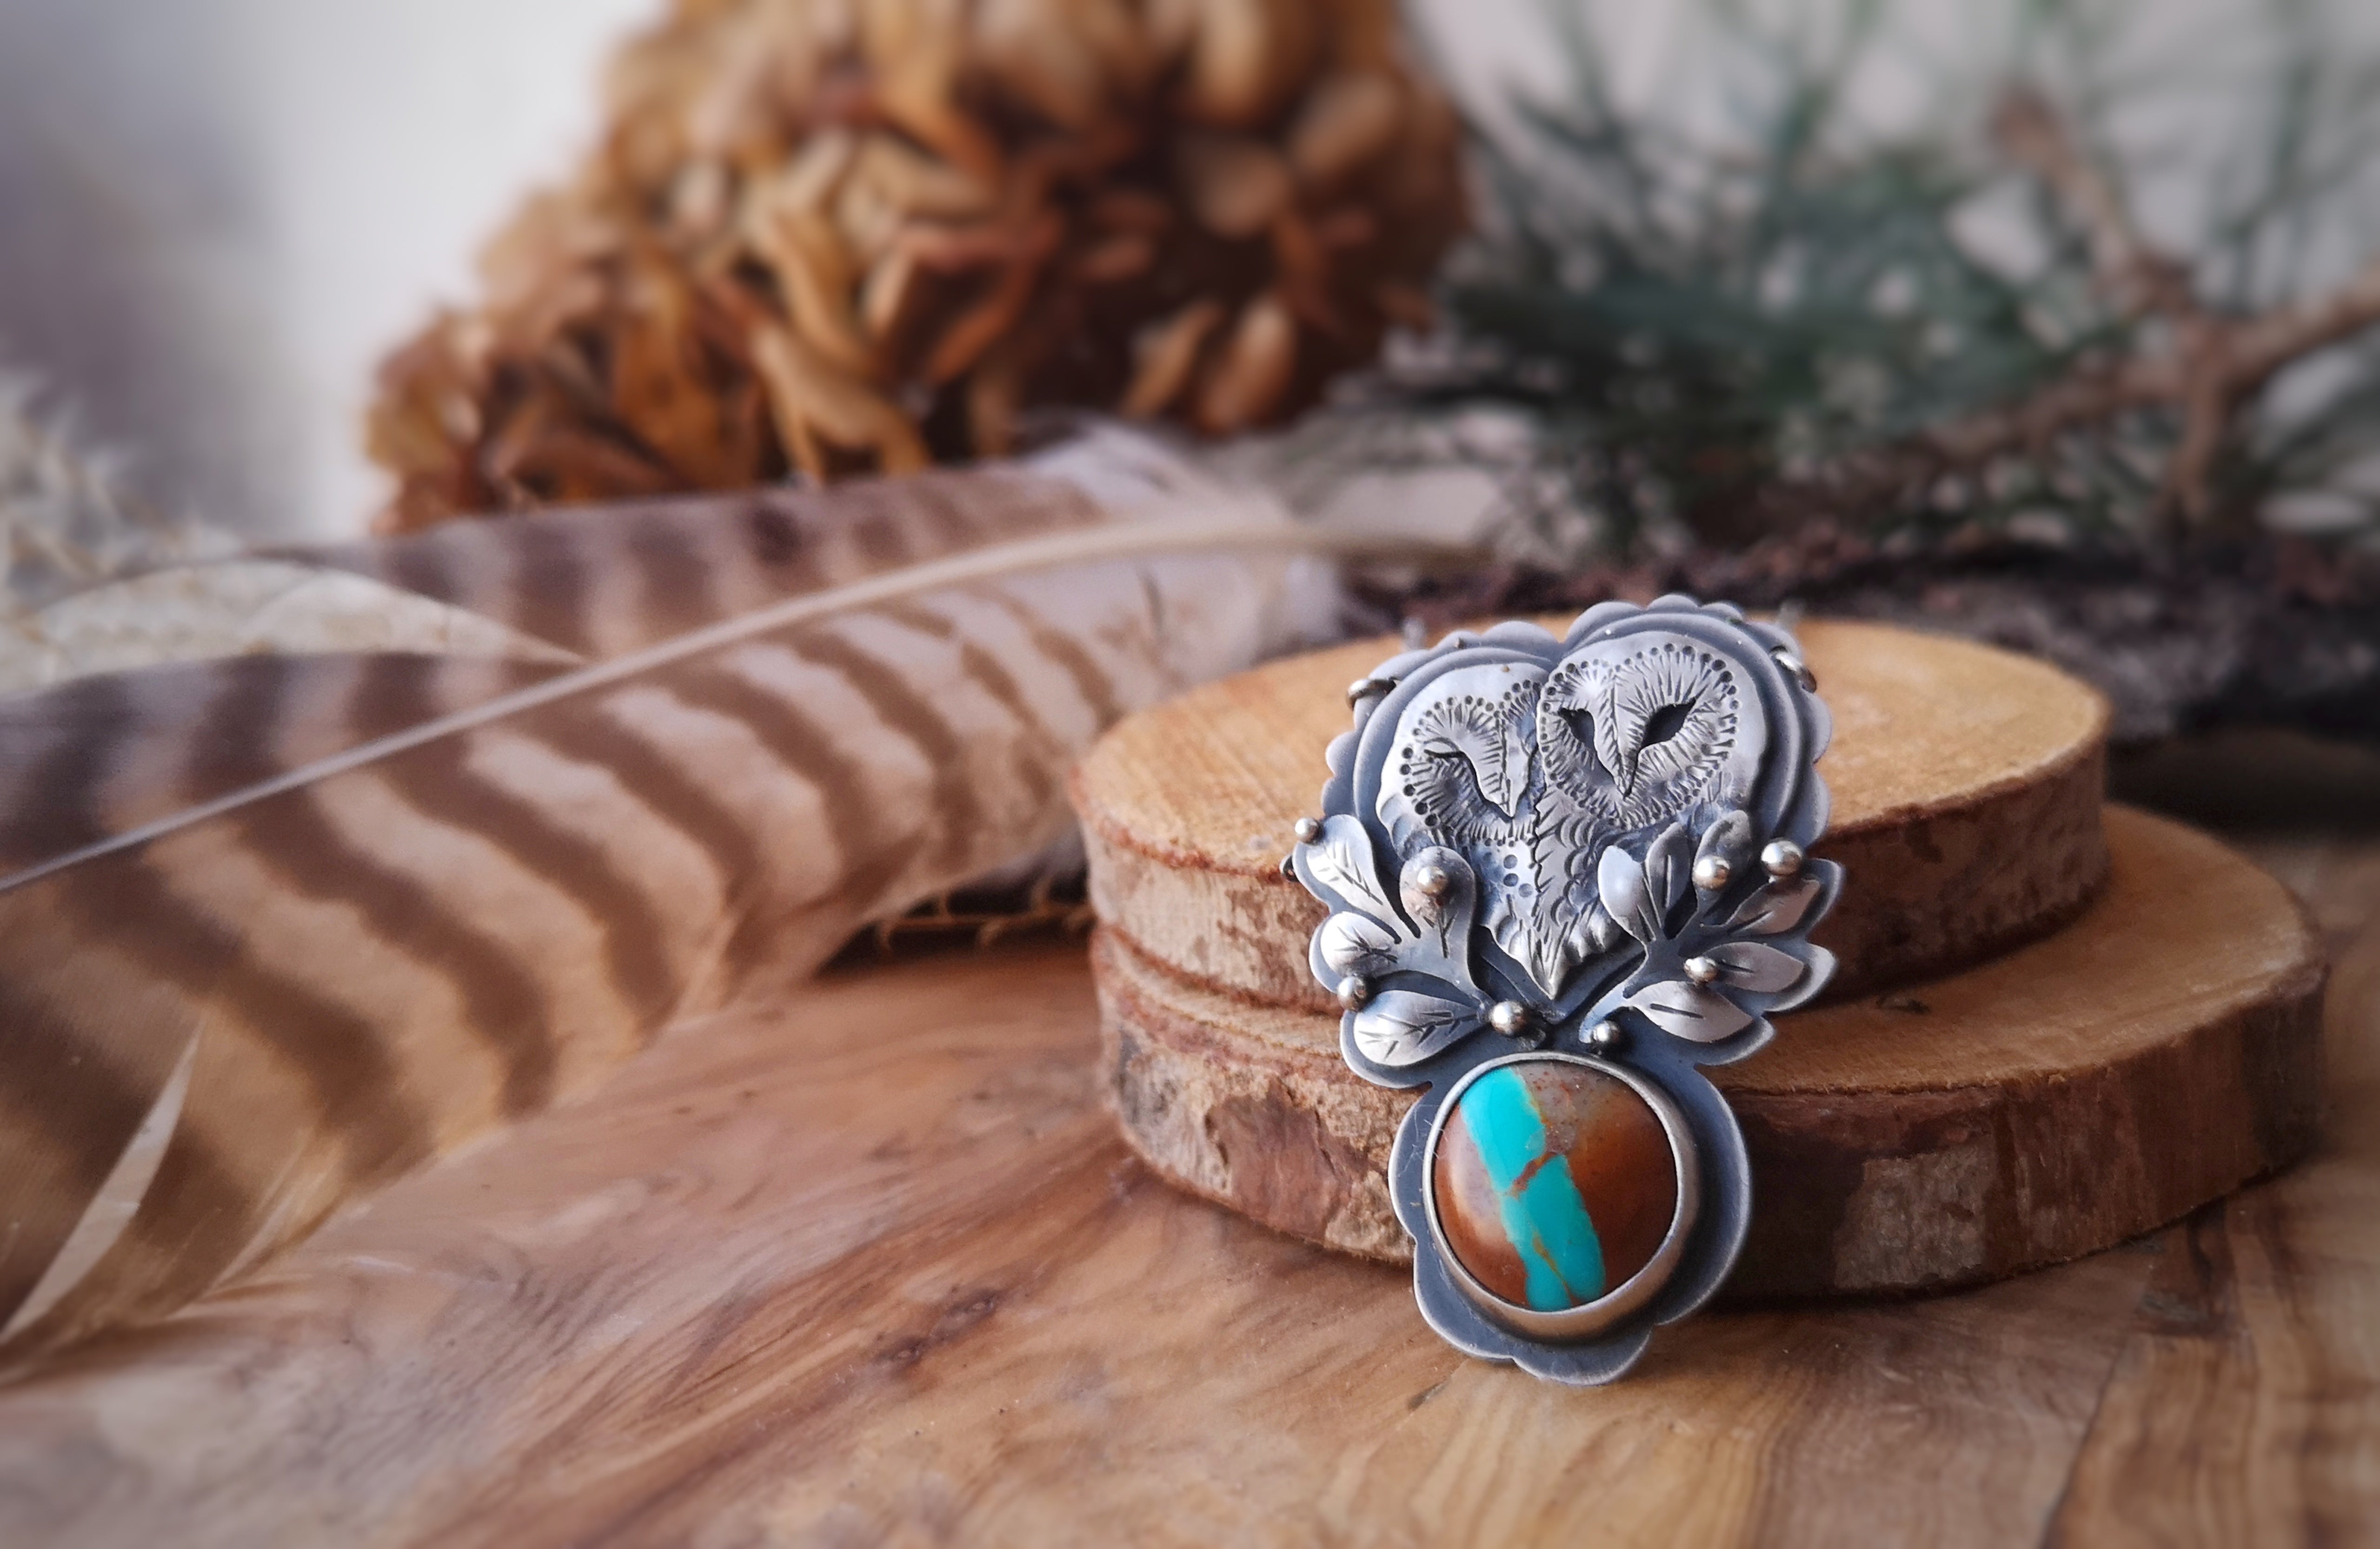 Hidden Secrets Necklace - Barn Owls & Royston Turquoise